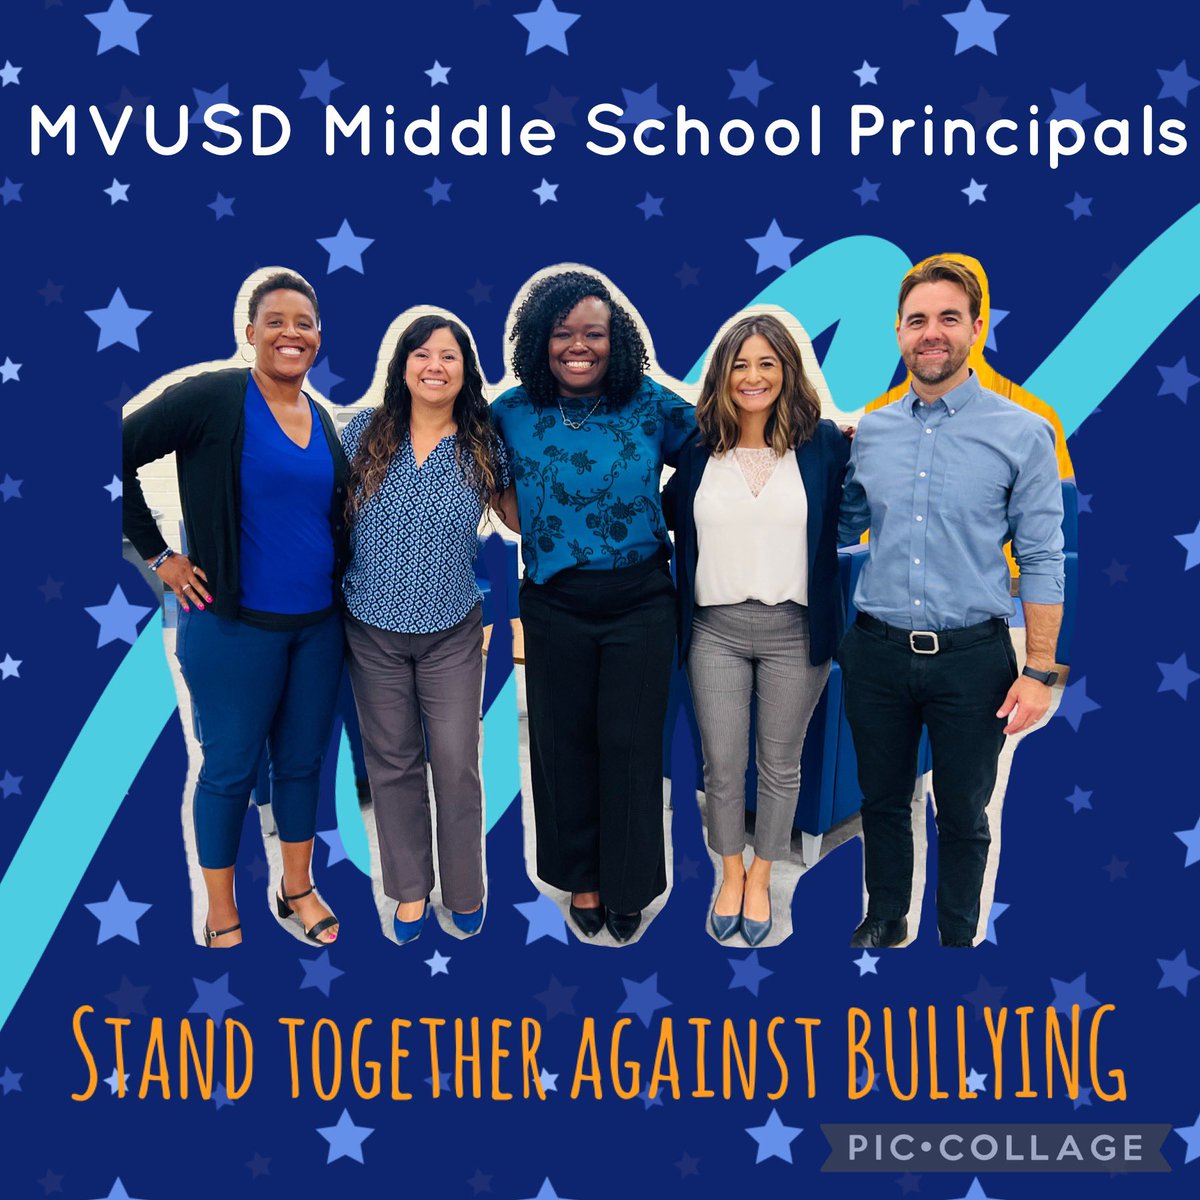 MVUSD Middle School Principals Stand TOGETHER against bullying. @MorenoValleyUSD #heartsunited #antibullying #MVUSDGoBeyond